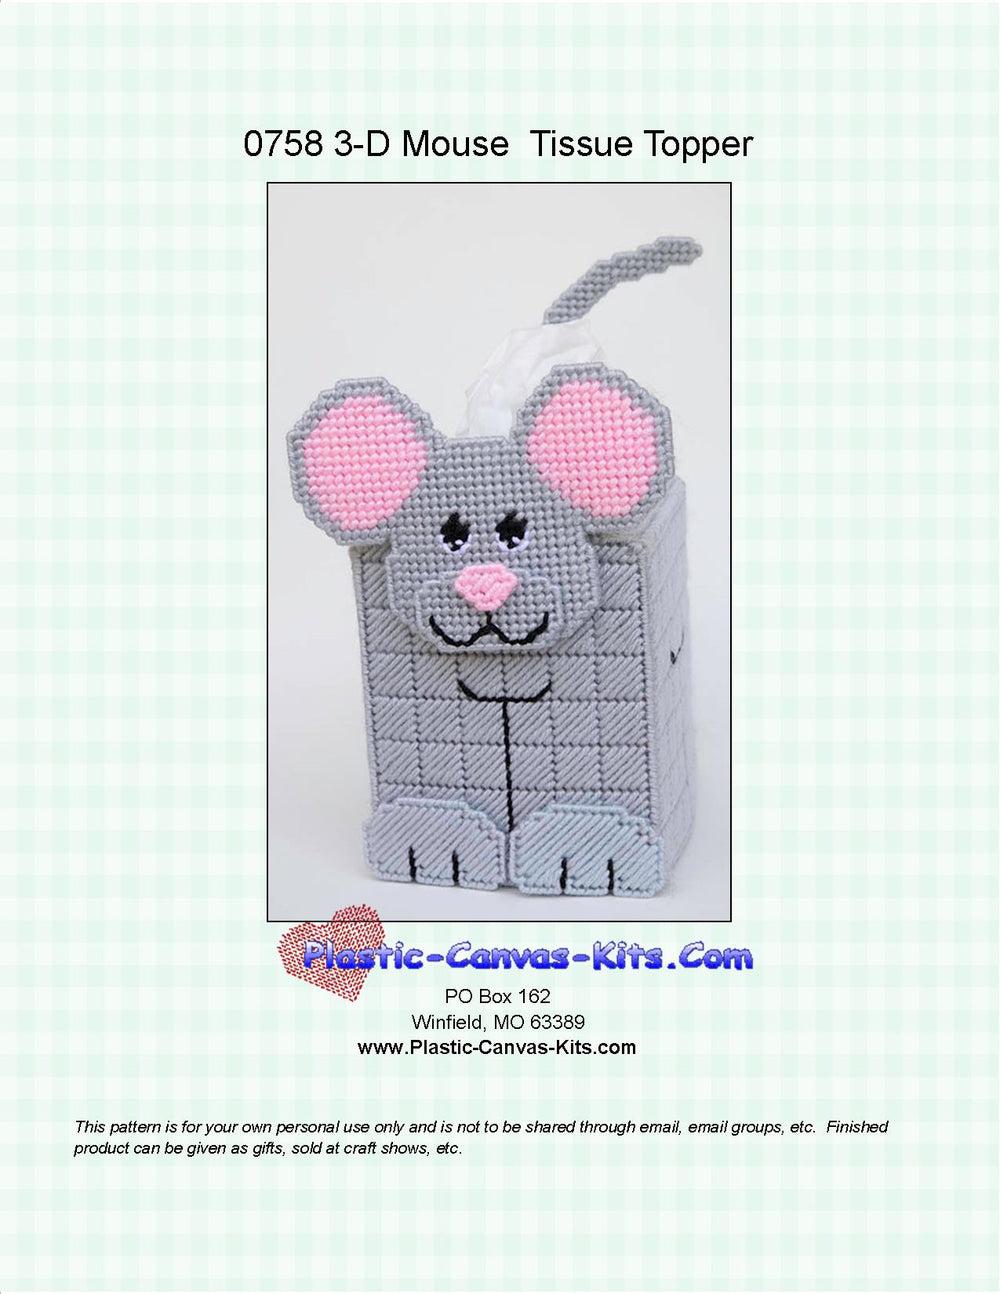 Mouse 3-D Tissue Topper